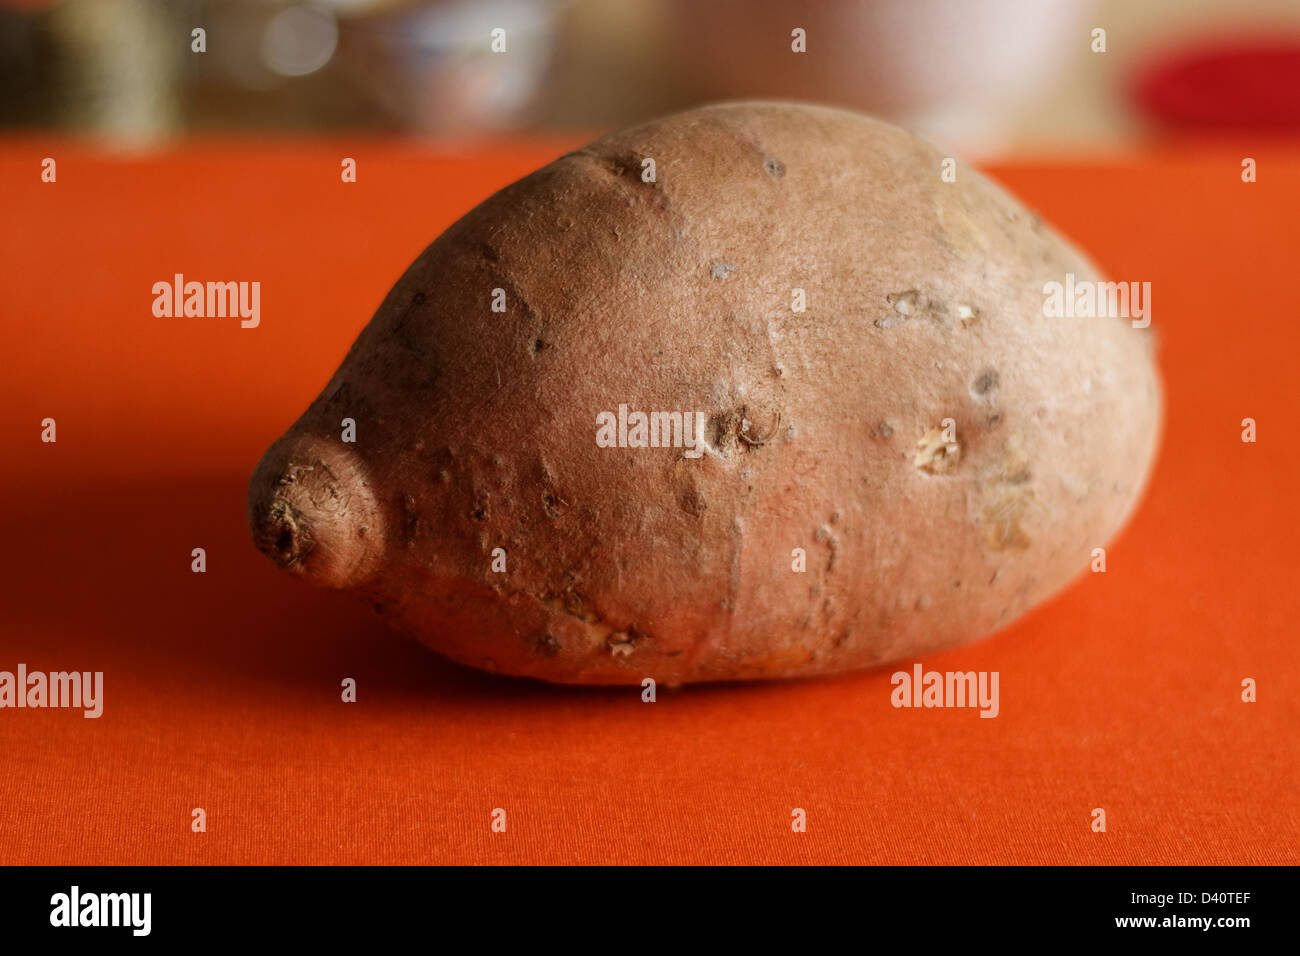 Whole yam or sweet potato. Stock Photo